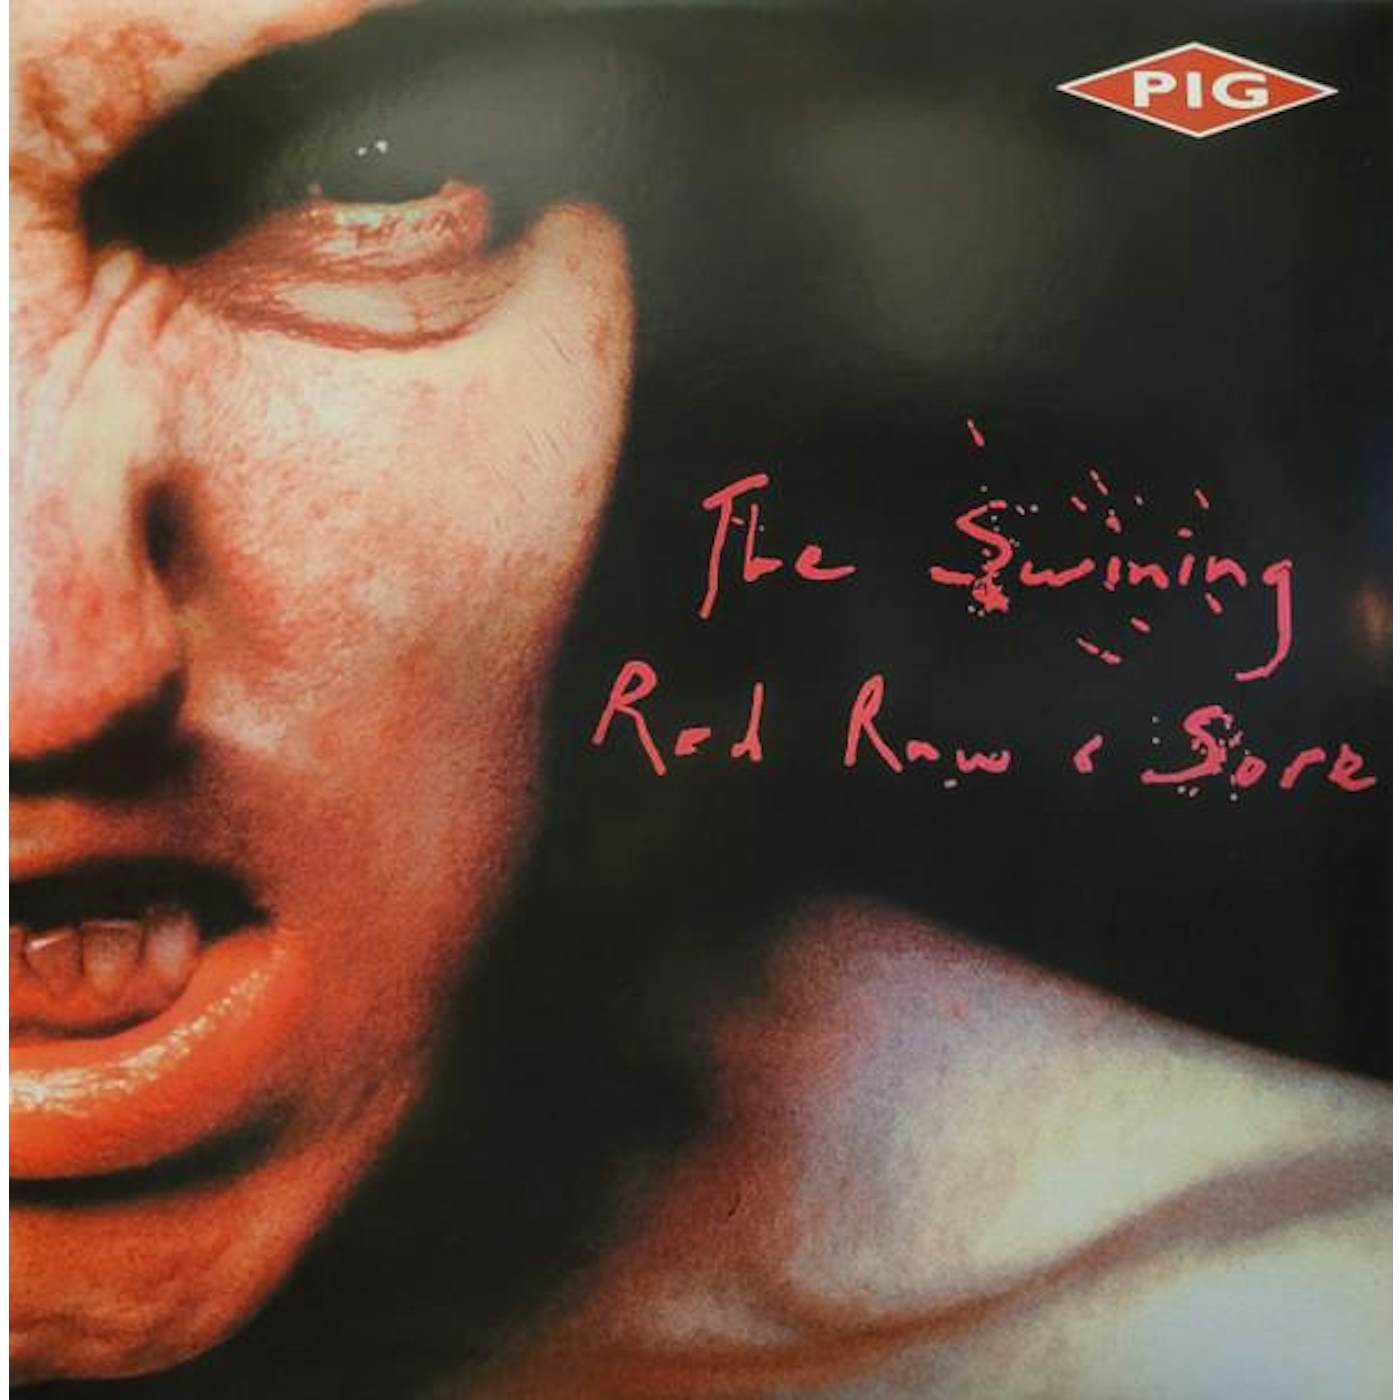 PIG Swining-red Raw & Sore (Red/Black Splatter Vinyl/Reissue/2LP) Vinyl Record